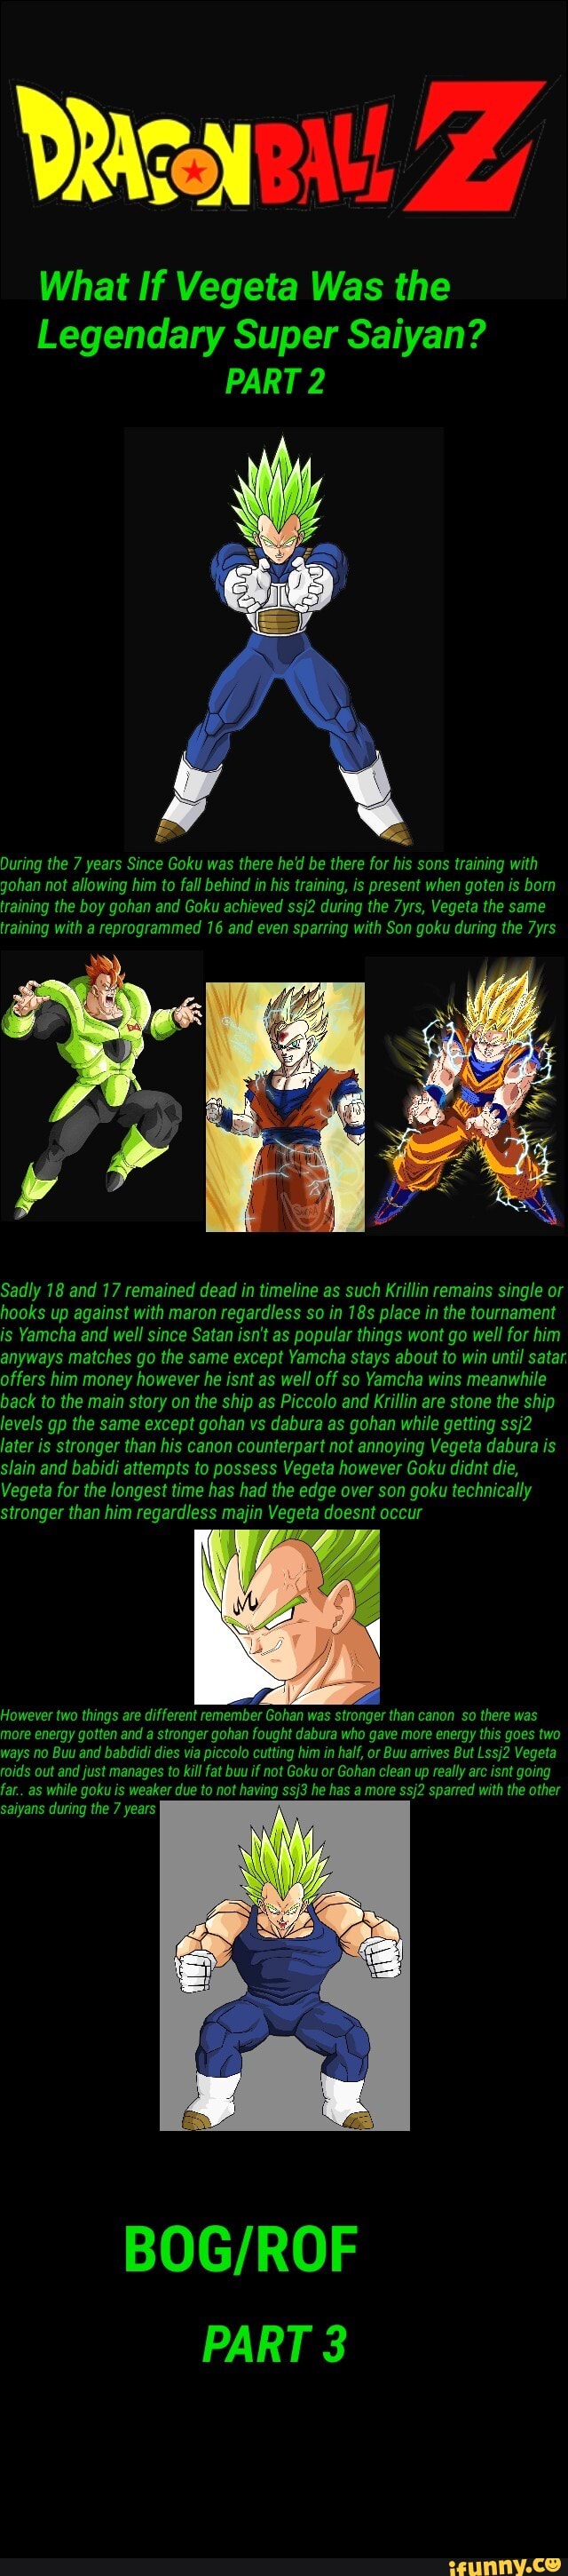 Why did it take 7 years for Vegeta to achieve SSJ2, when Goku